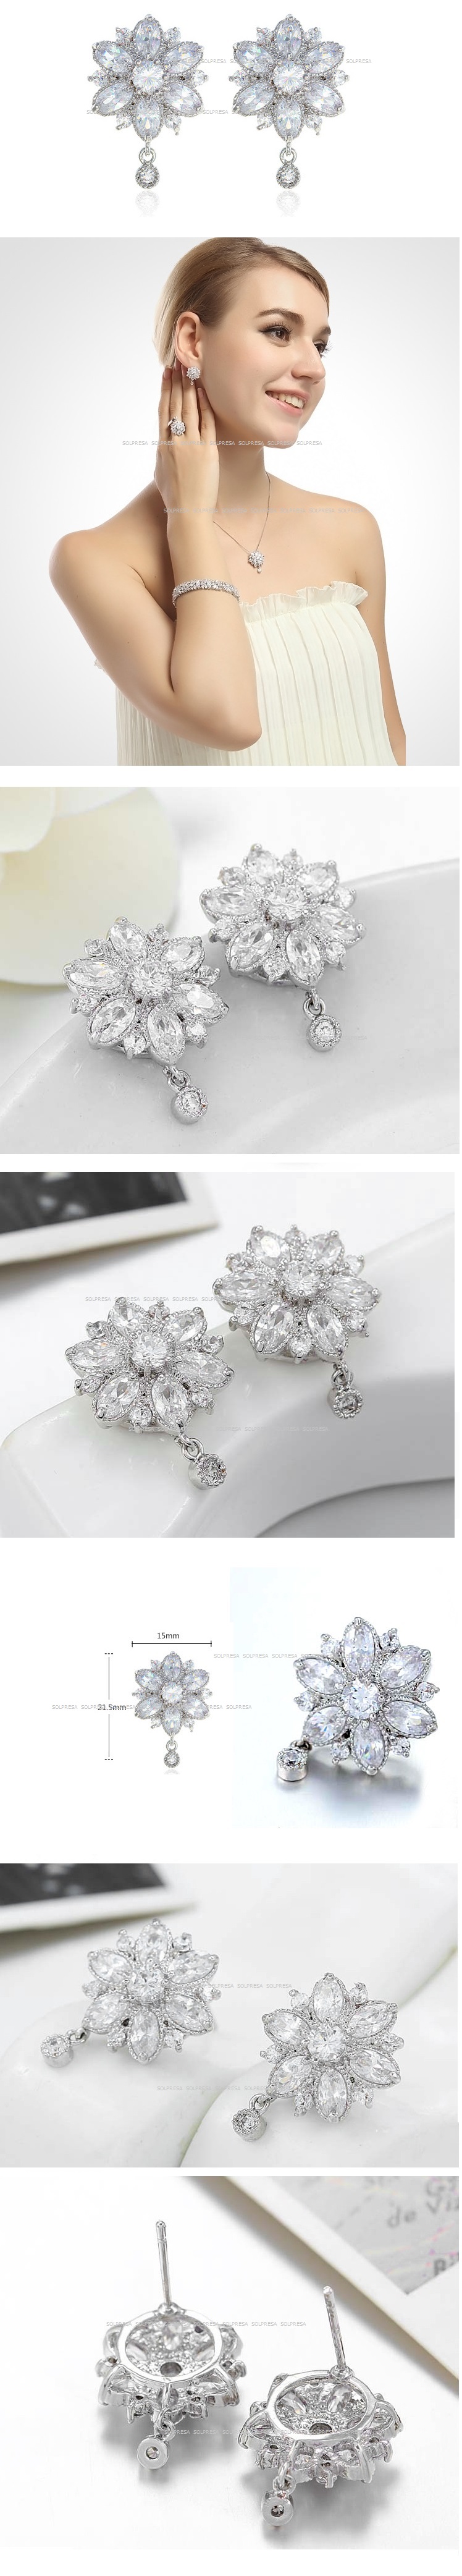 Solpresa Bridal Prosperity Flower 18K Earrings